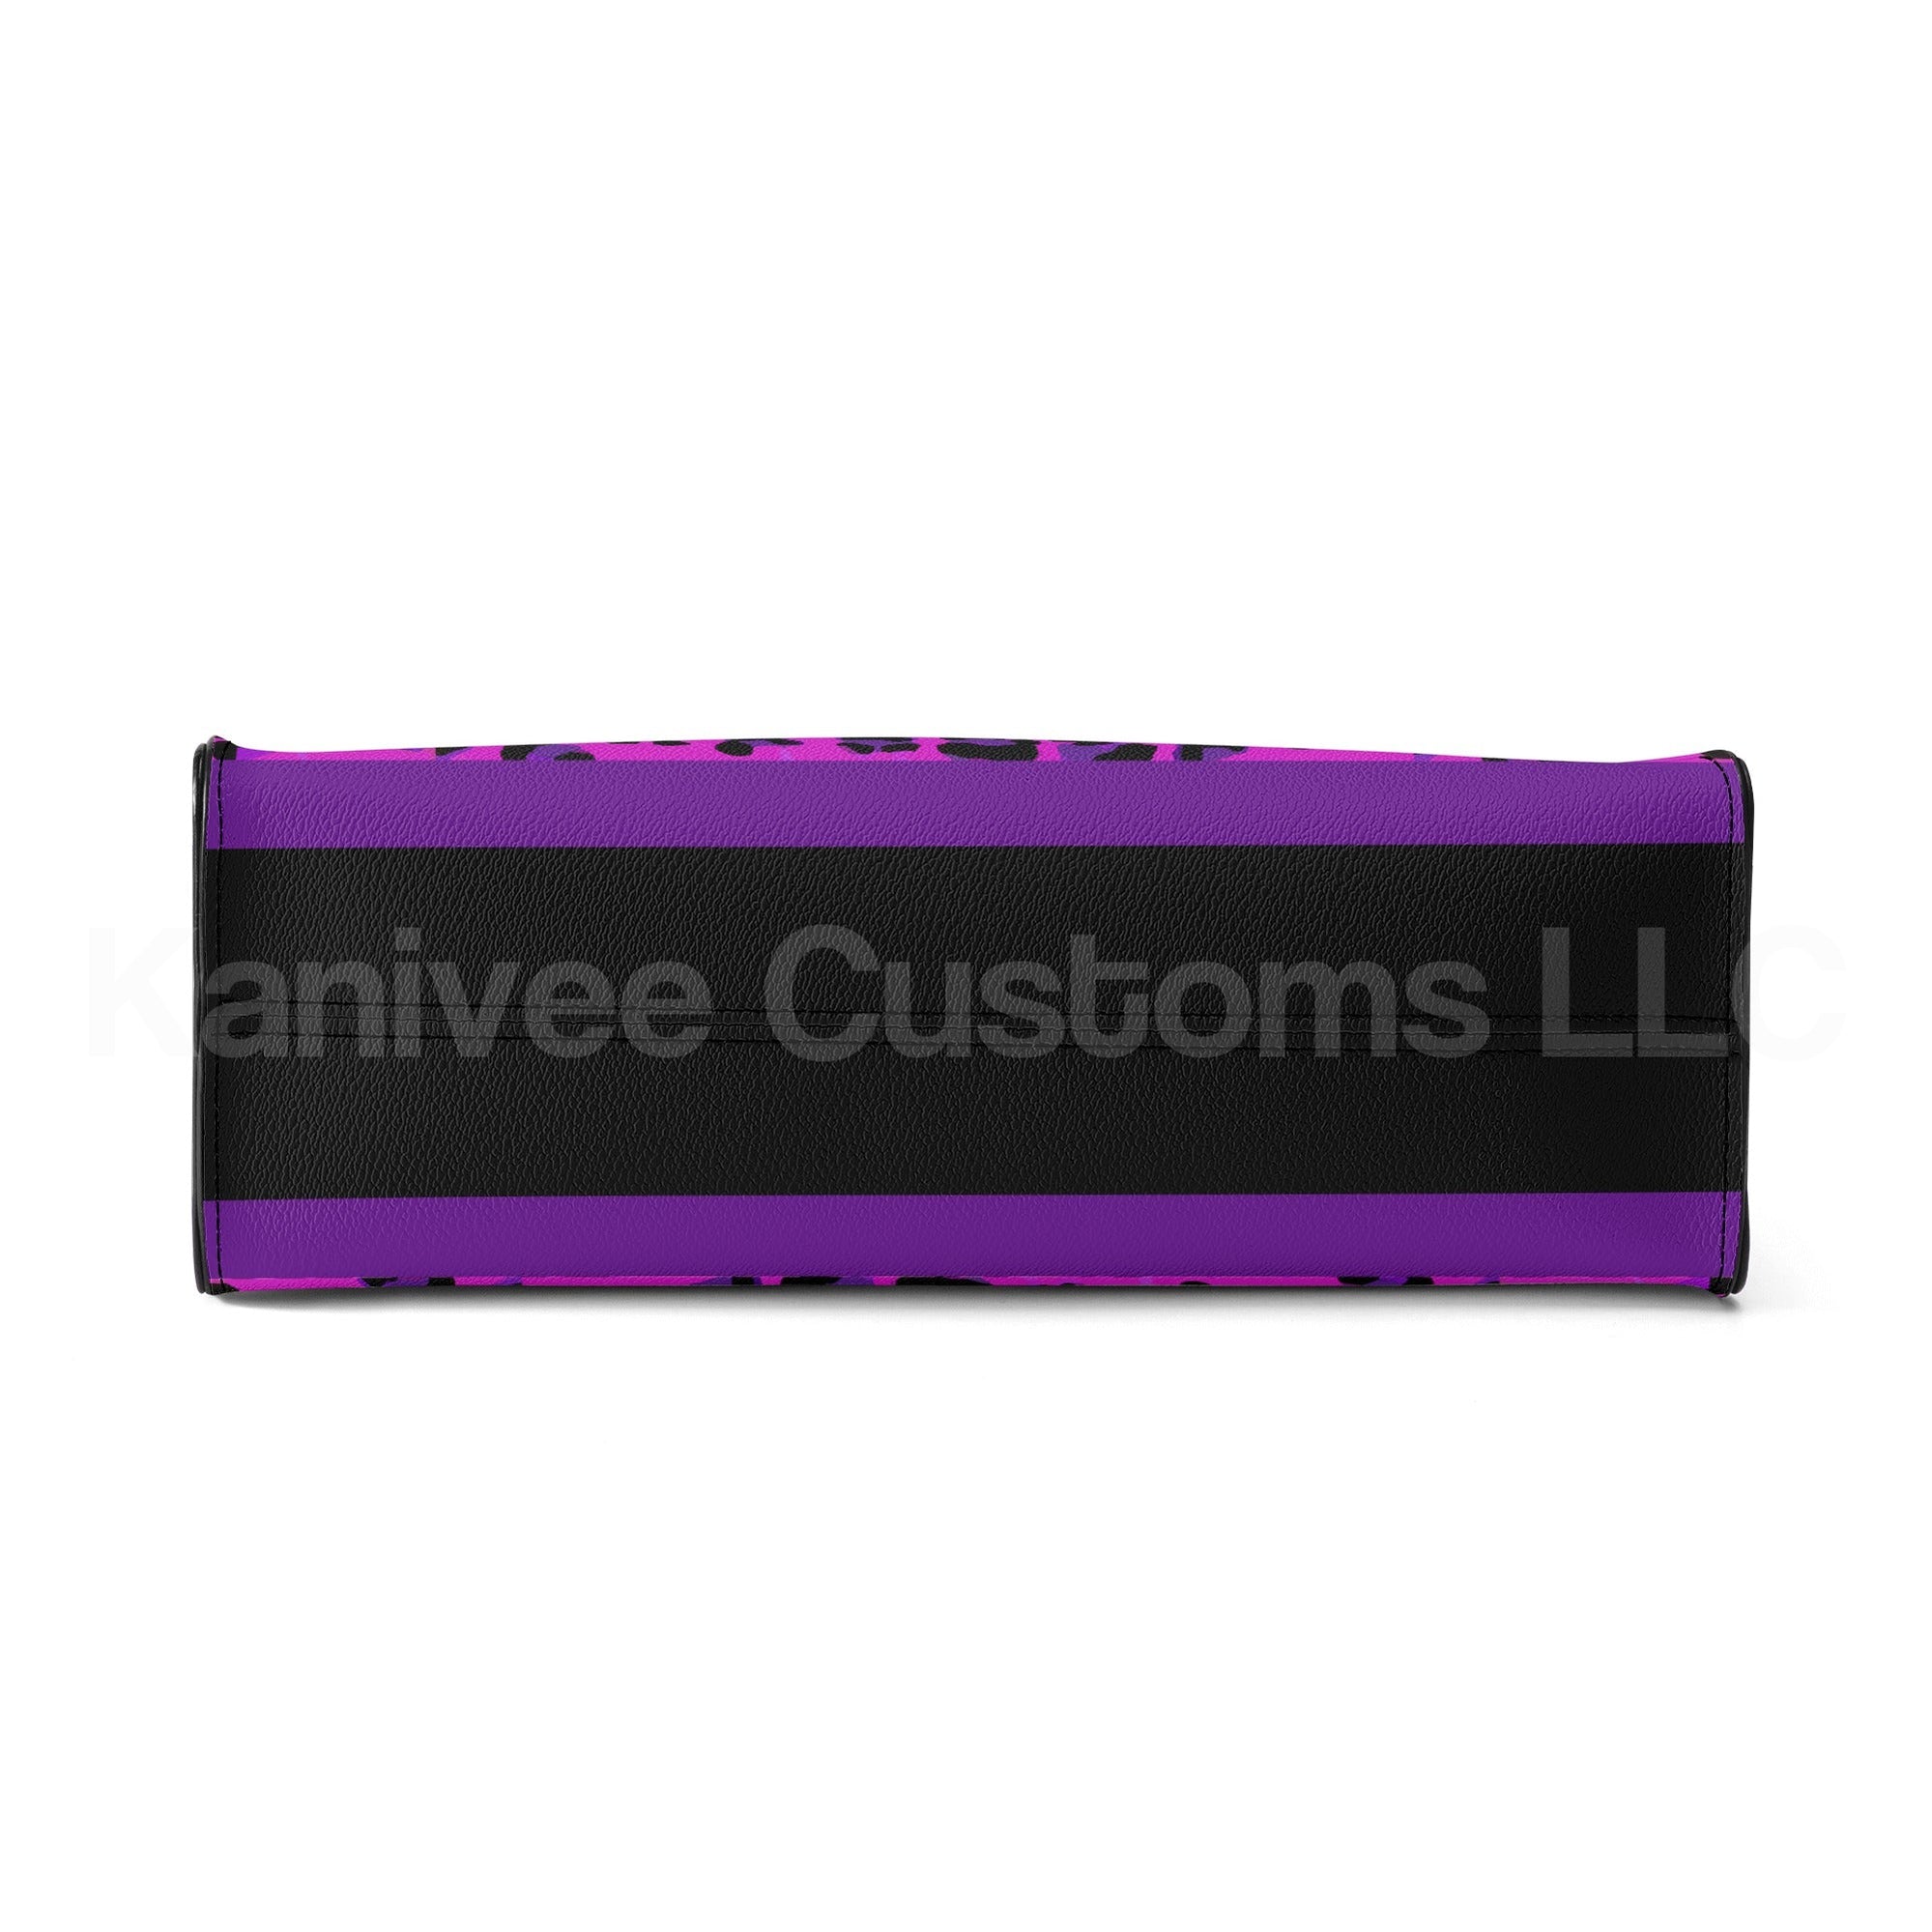 Gushyfruit PurpleLeopard MoneyBag - Kanivee Customs